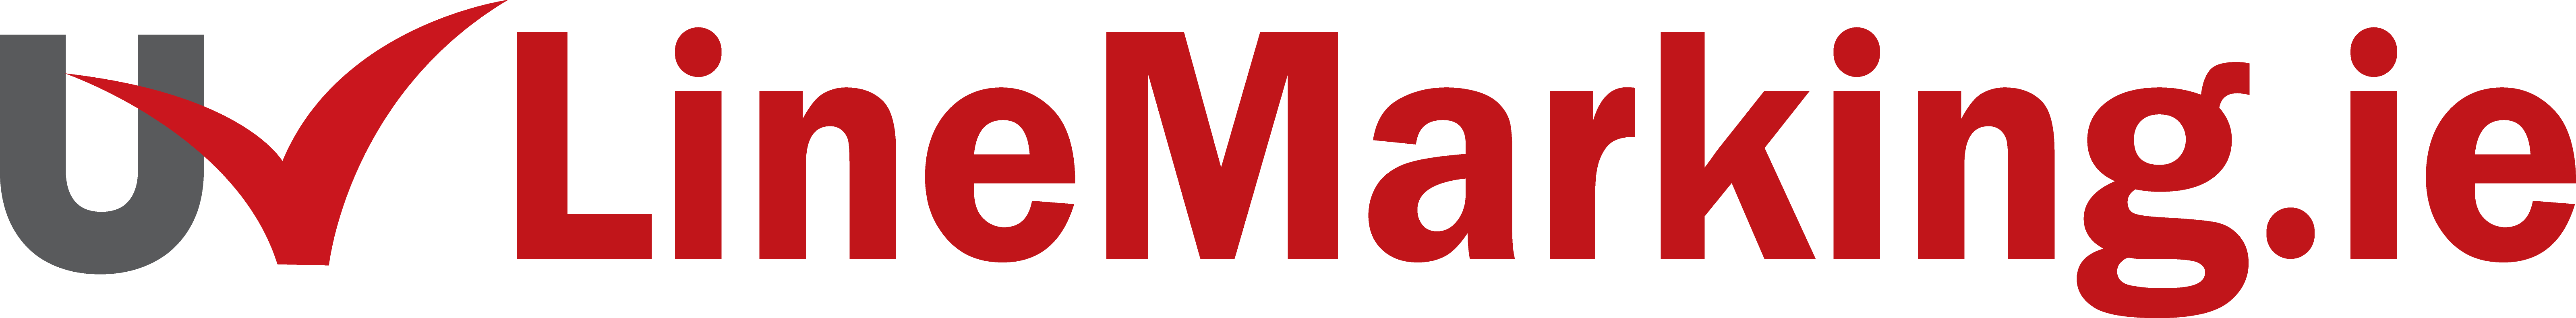 UVLineMarking Logo